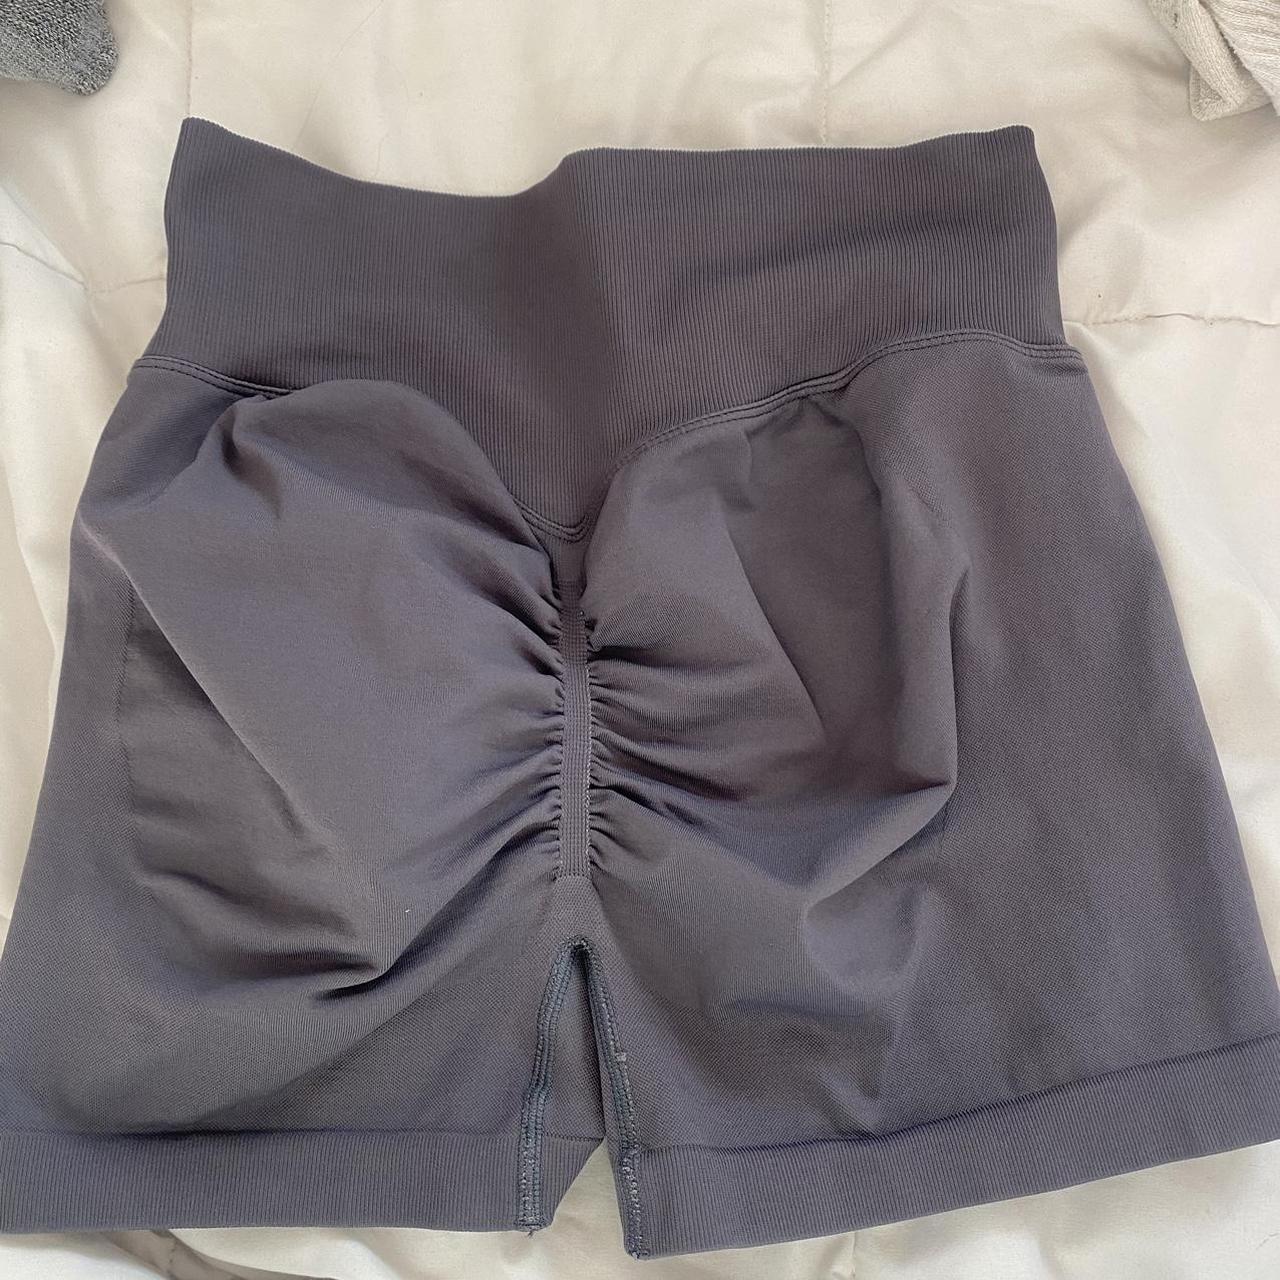 Gymshark Women's Grey Shorts | Depop